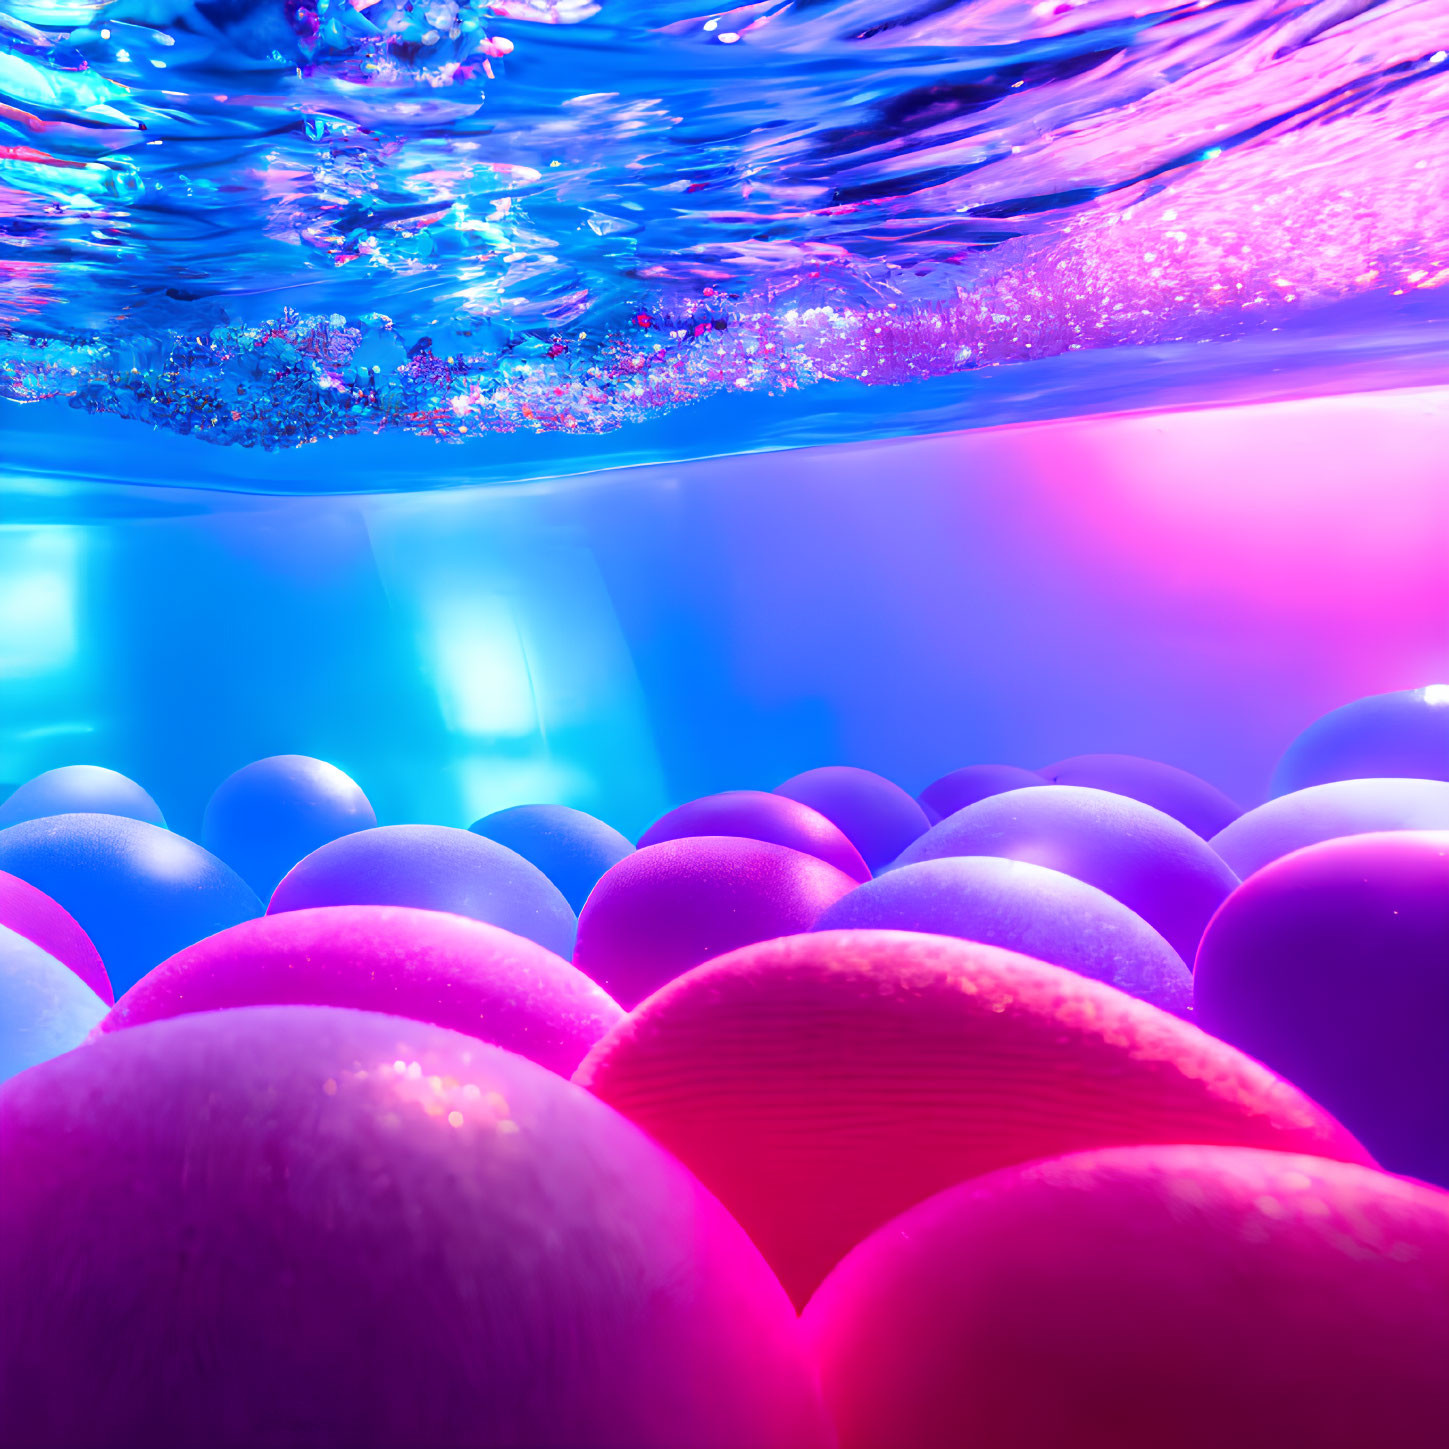 Vibrant spheres in pink to blue gradient light underwater